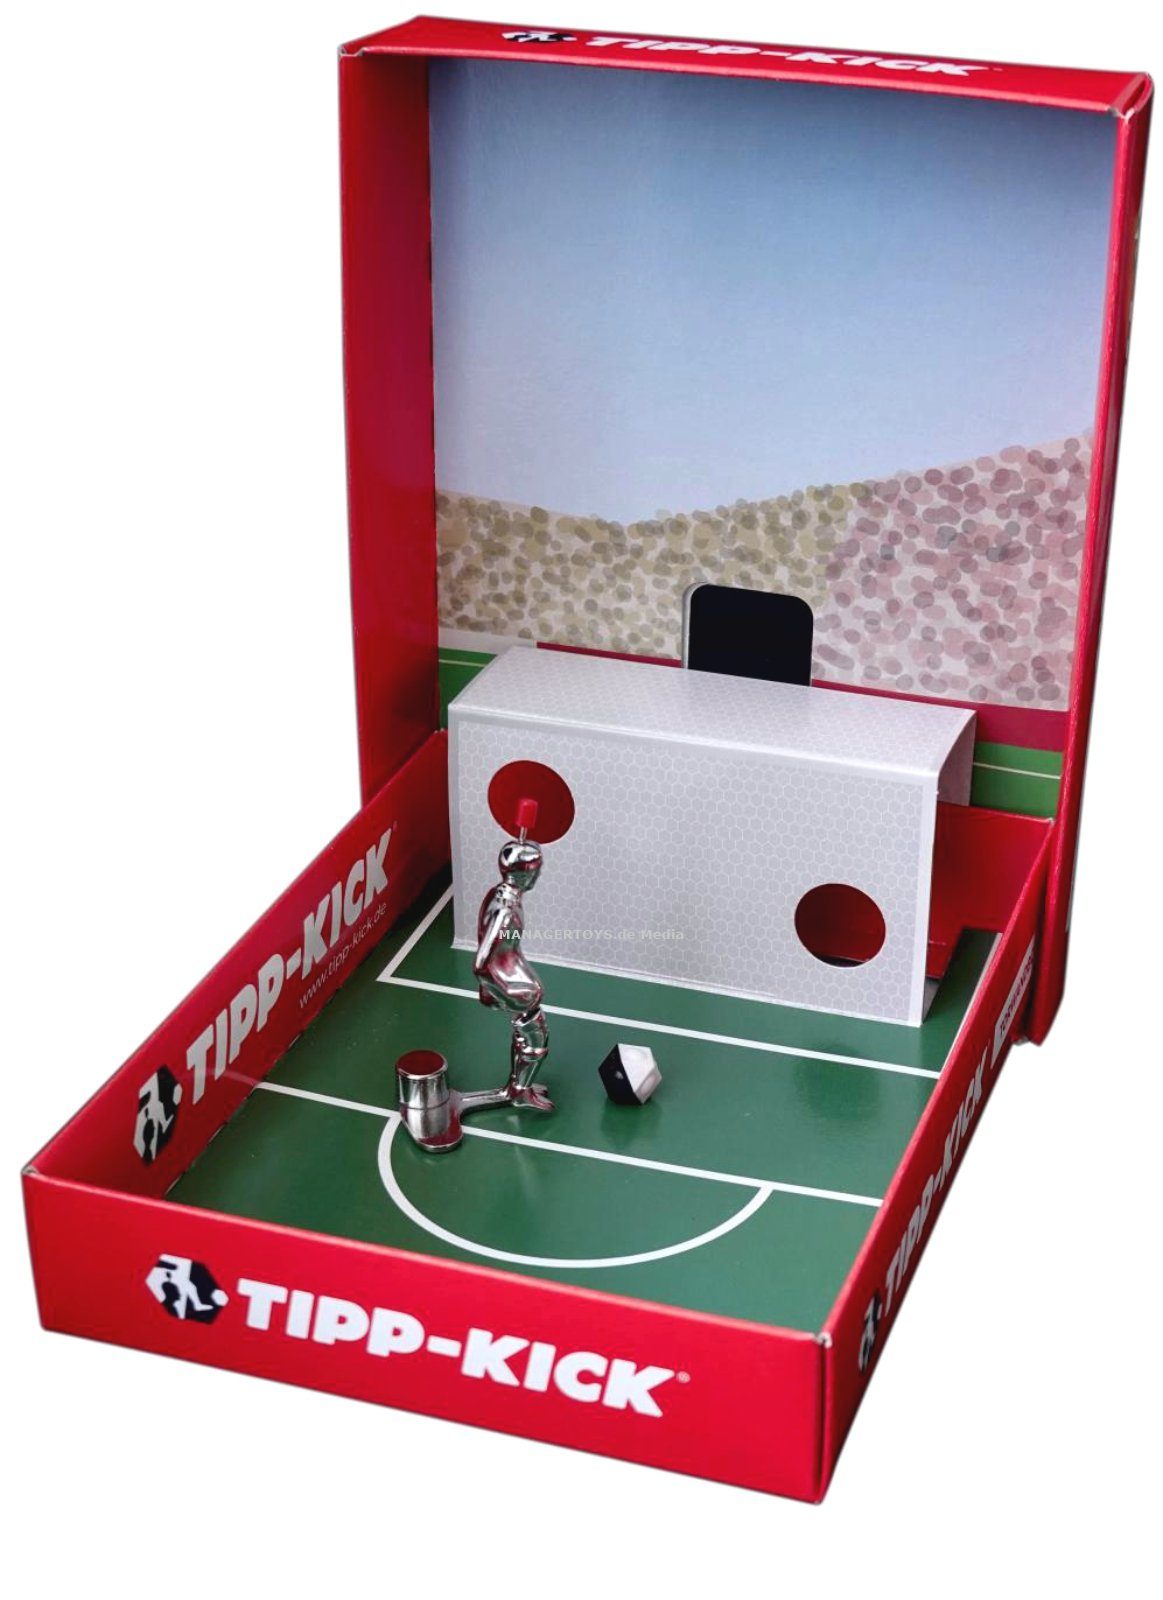 TIPP-KICK Star Kicker ITALIEN mit Torwand Ball Hymne Tip Kick Figur Spieler 